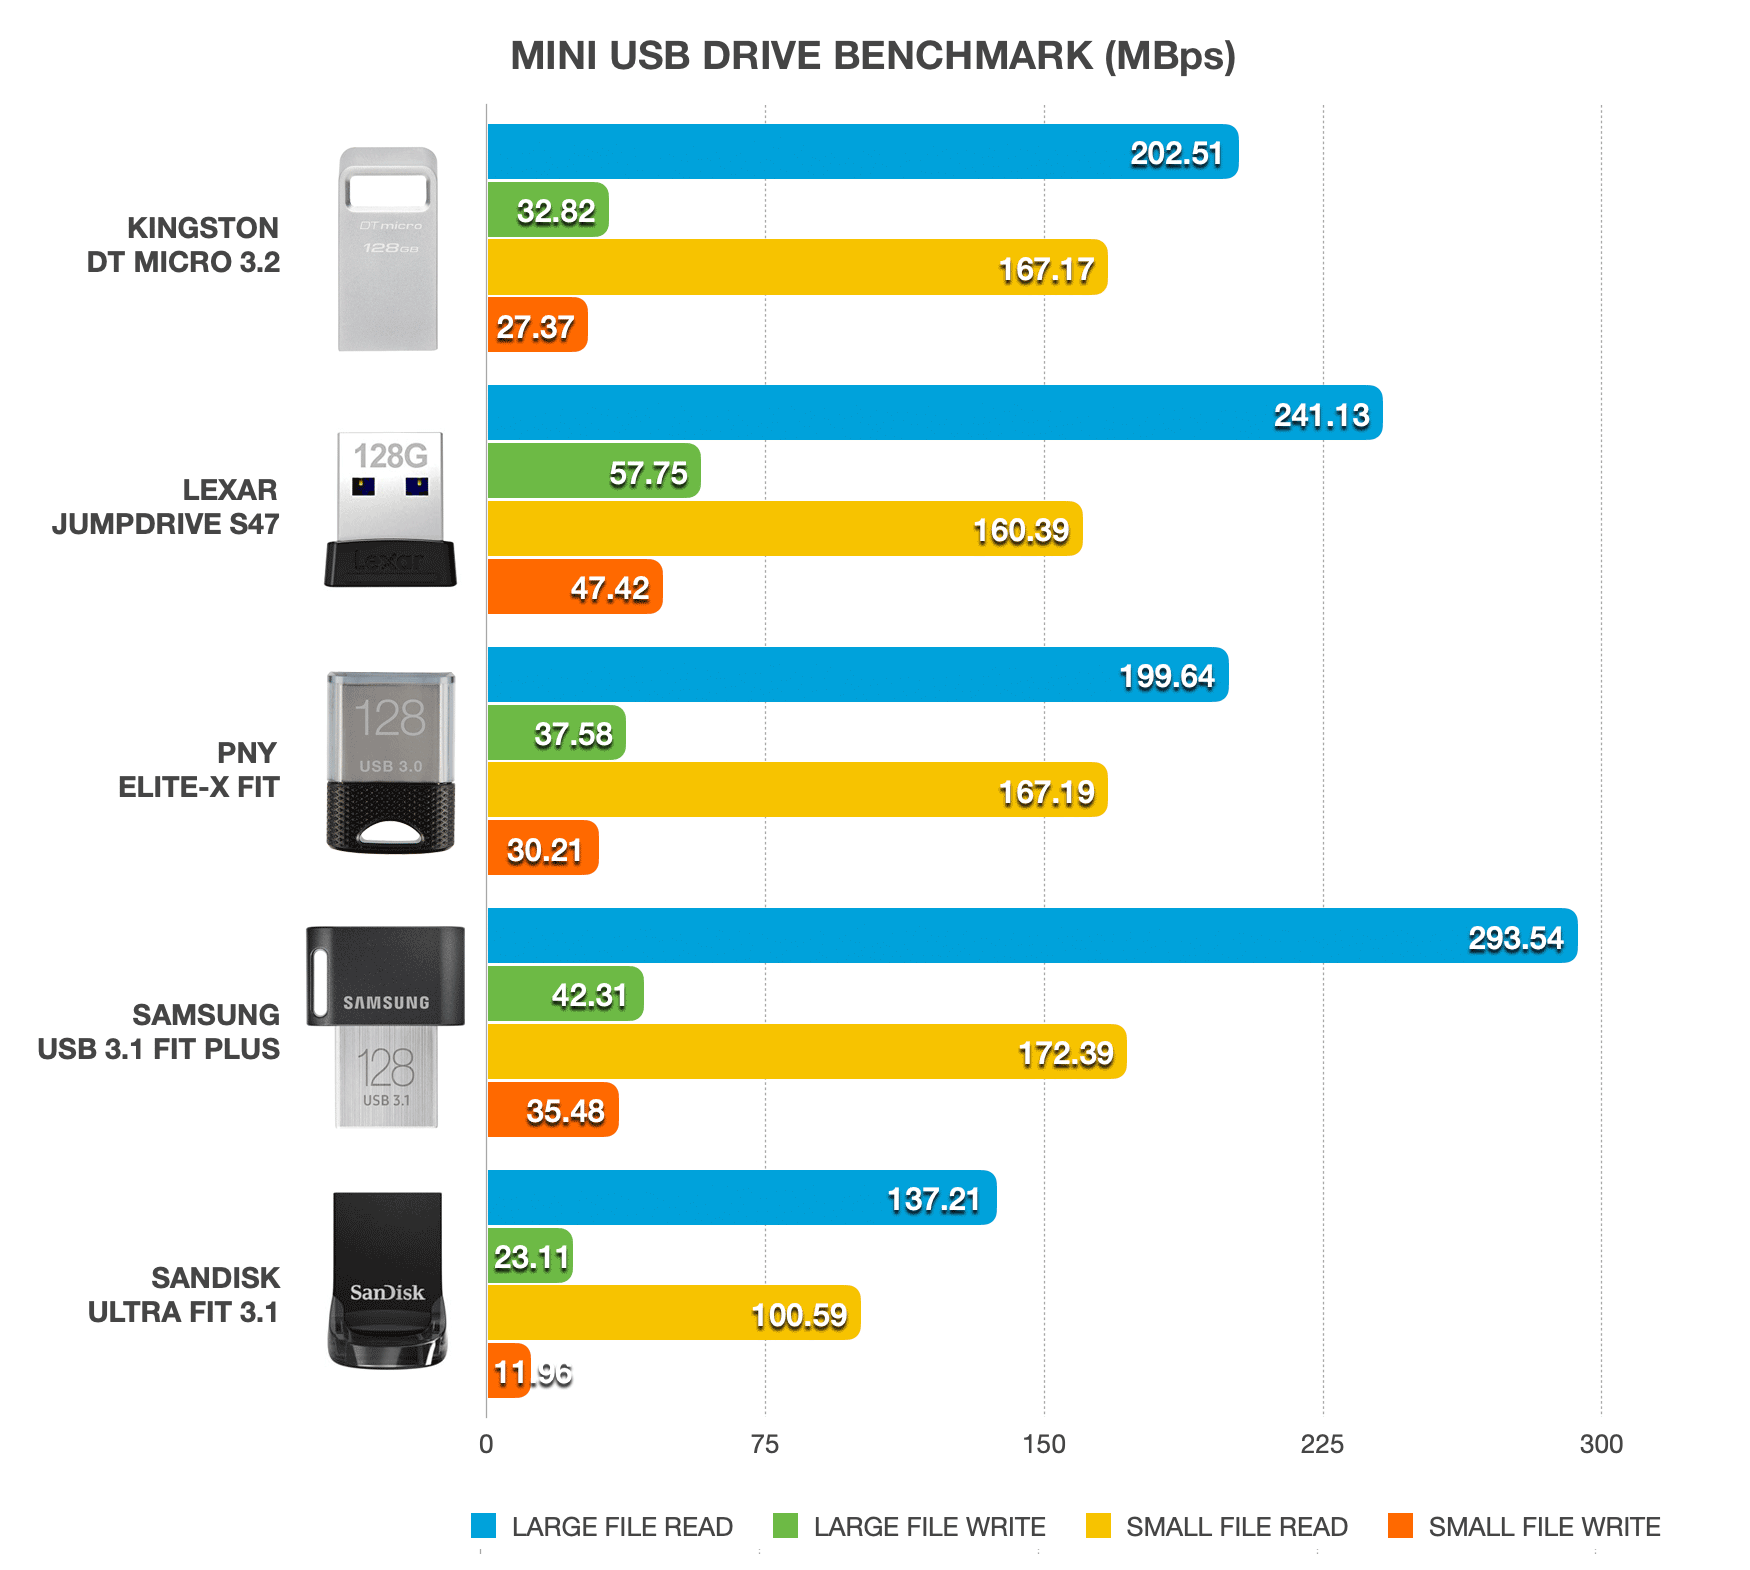 Bar chart comparing USB speeds between Kingston DataTraveler Micro, Lexar JumpDrive S47, PNY Elite-X Fit, Samsung Fit Plus, and Sandisk Ultra Fit 3.1